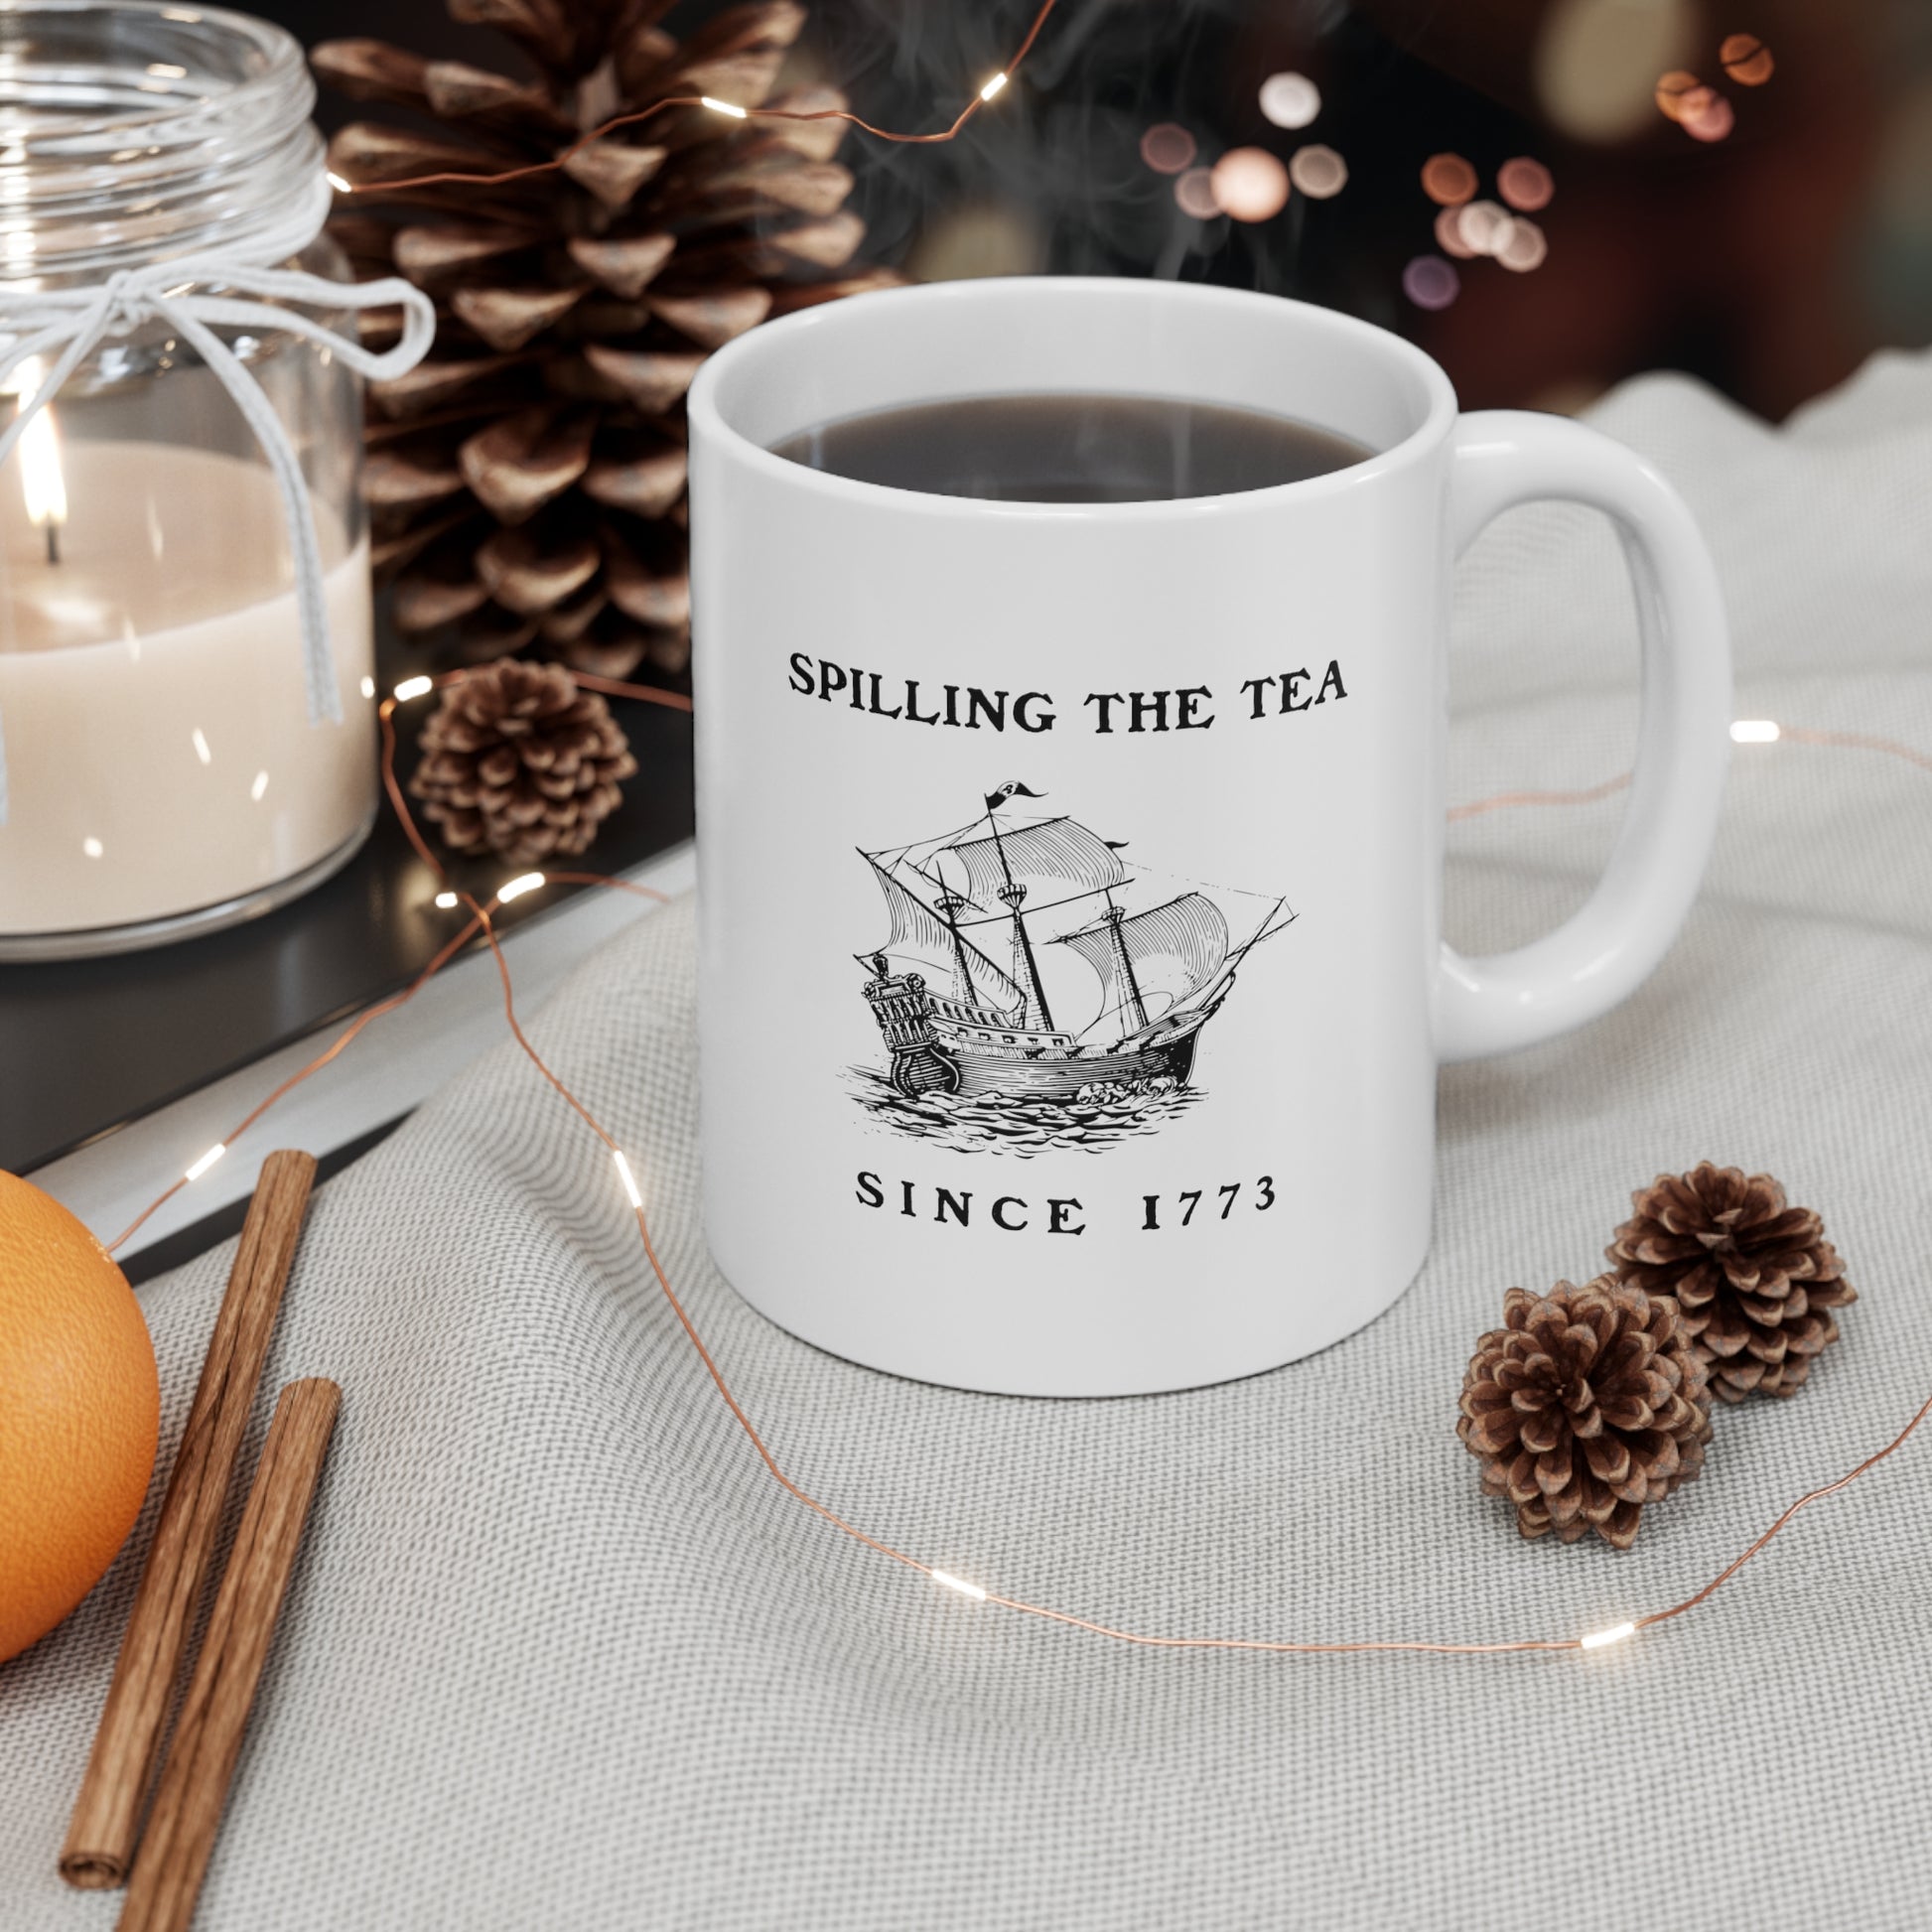 Humorous take on American history with "Spilling the Tea" coffee mug